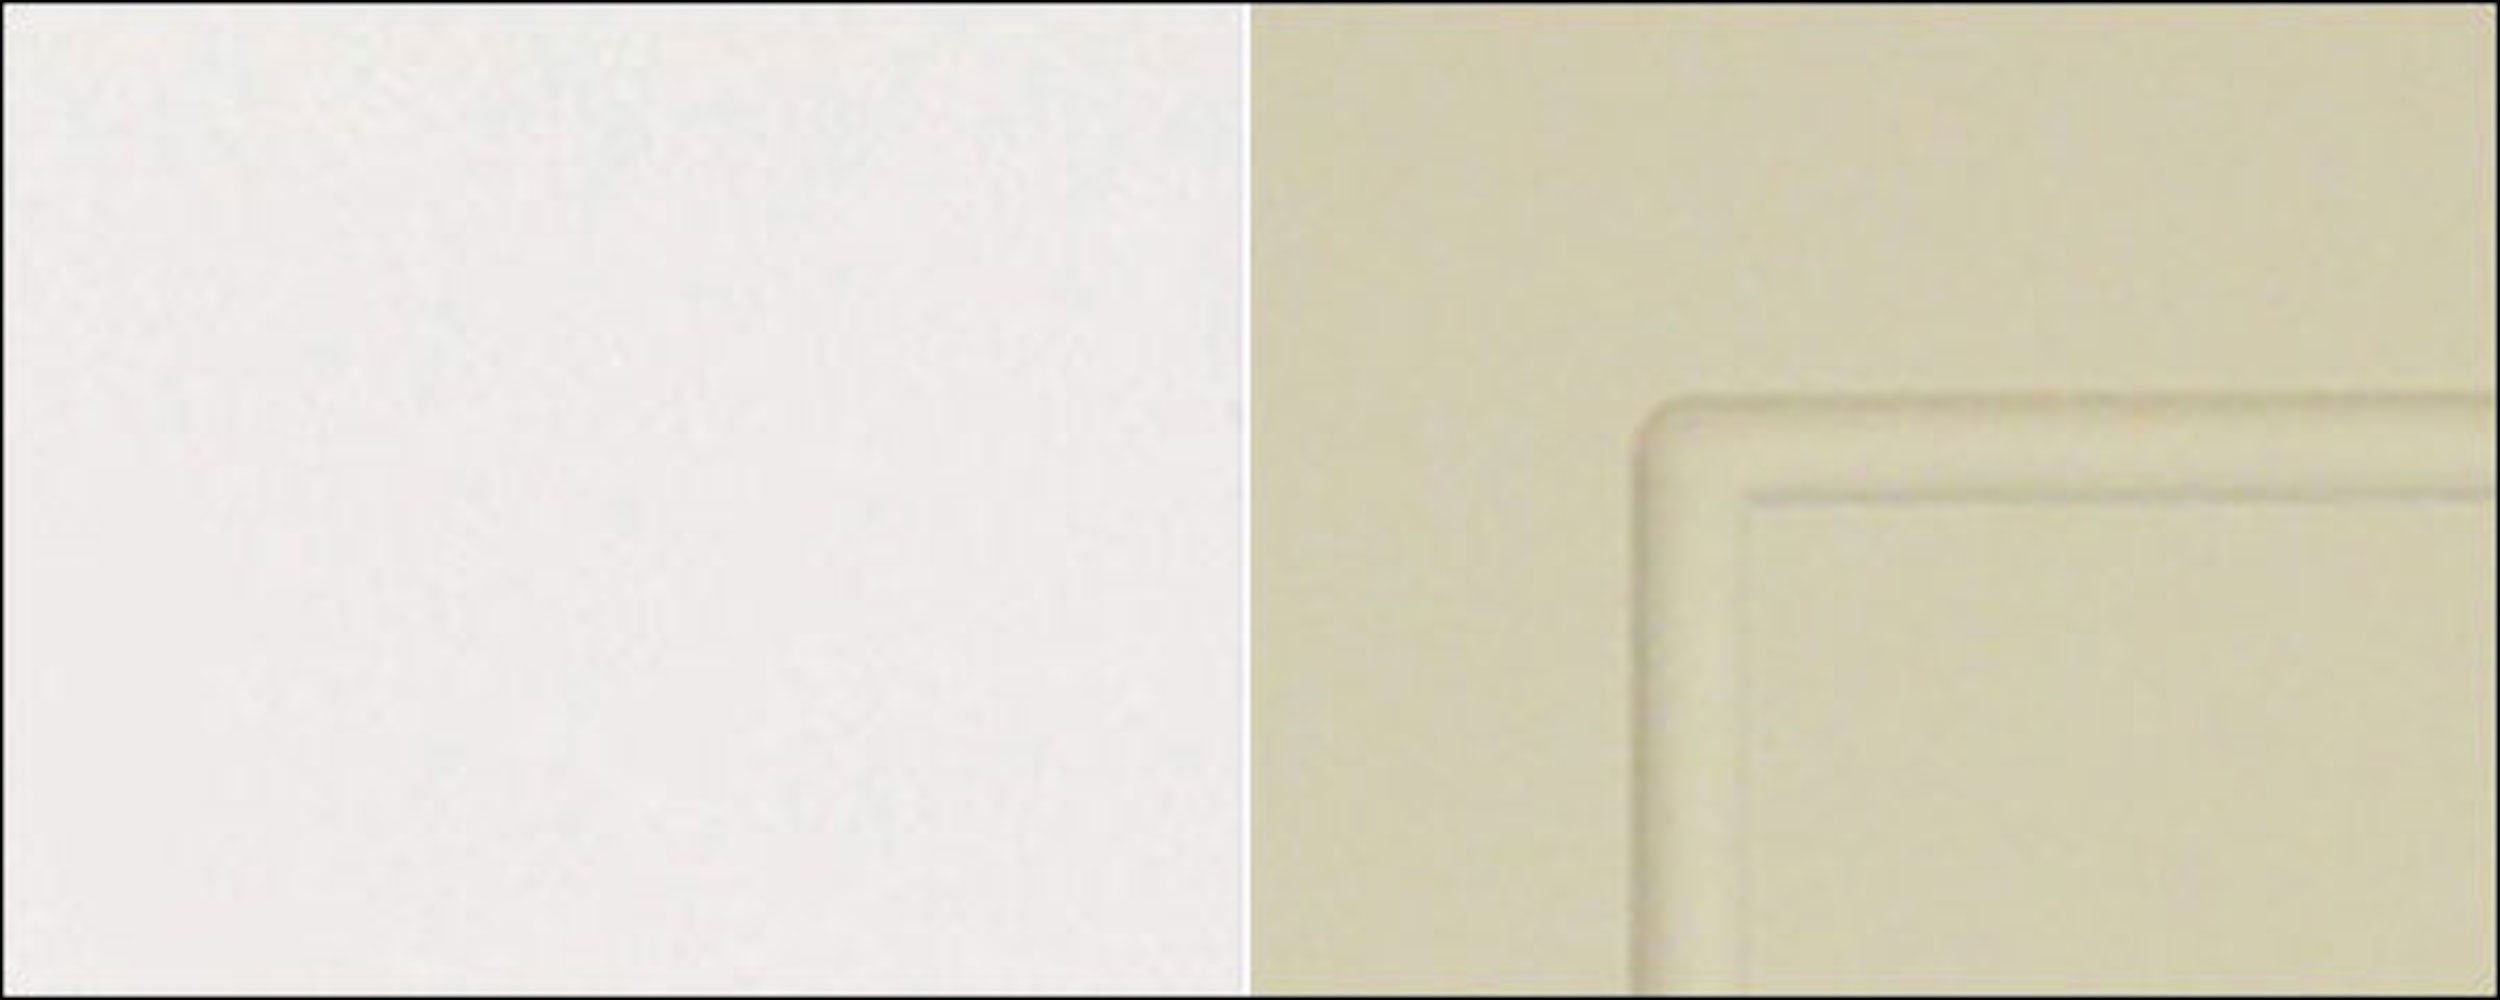 60cm Klapphängeschrank (Kvantum) Kvantum Korpusfarbe Front- matt und vanille wählbar Feldmann-Wohnen 2-türig